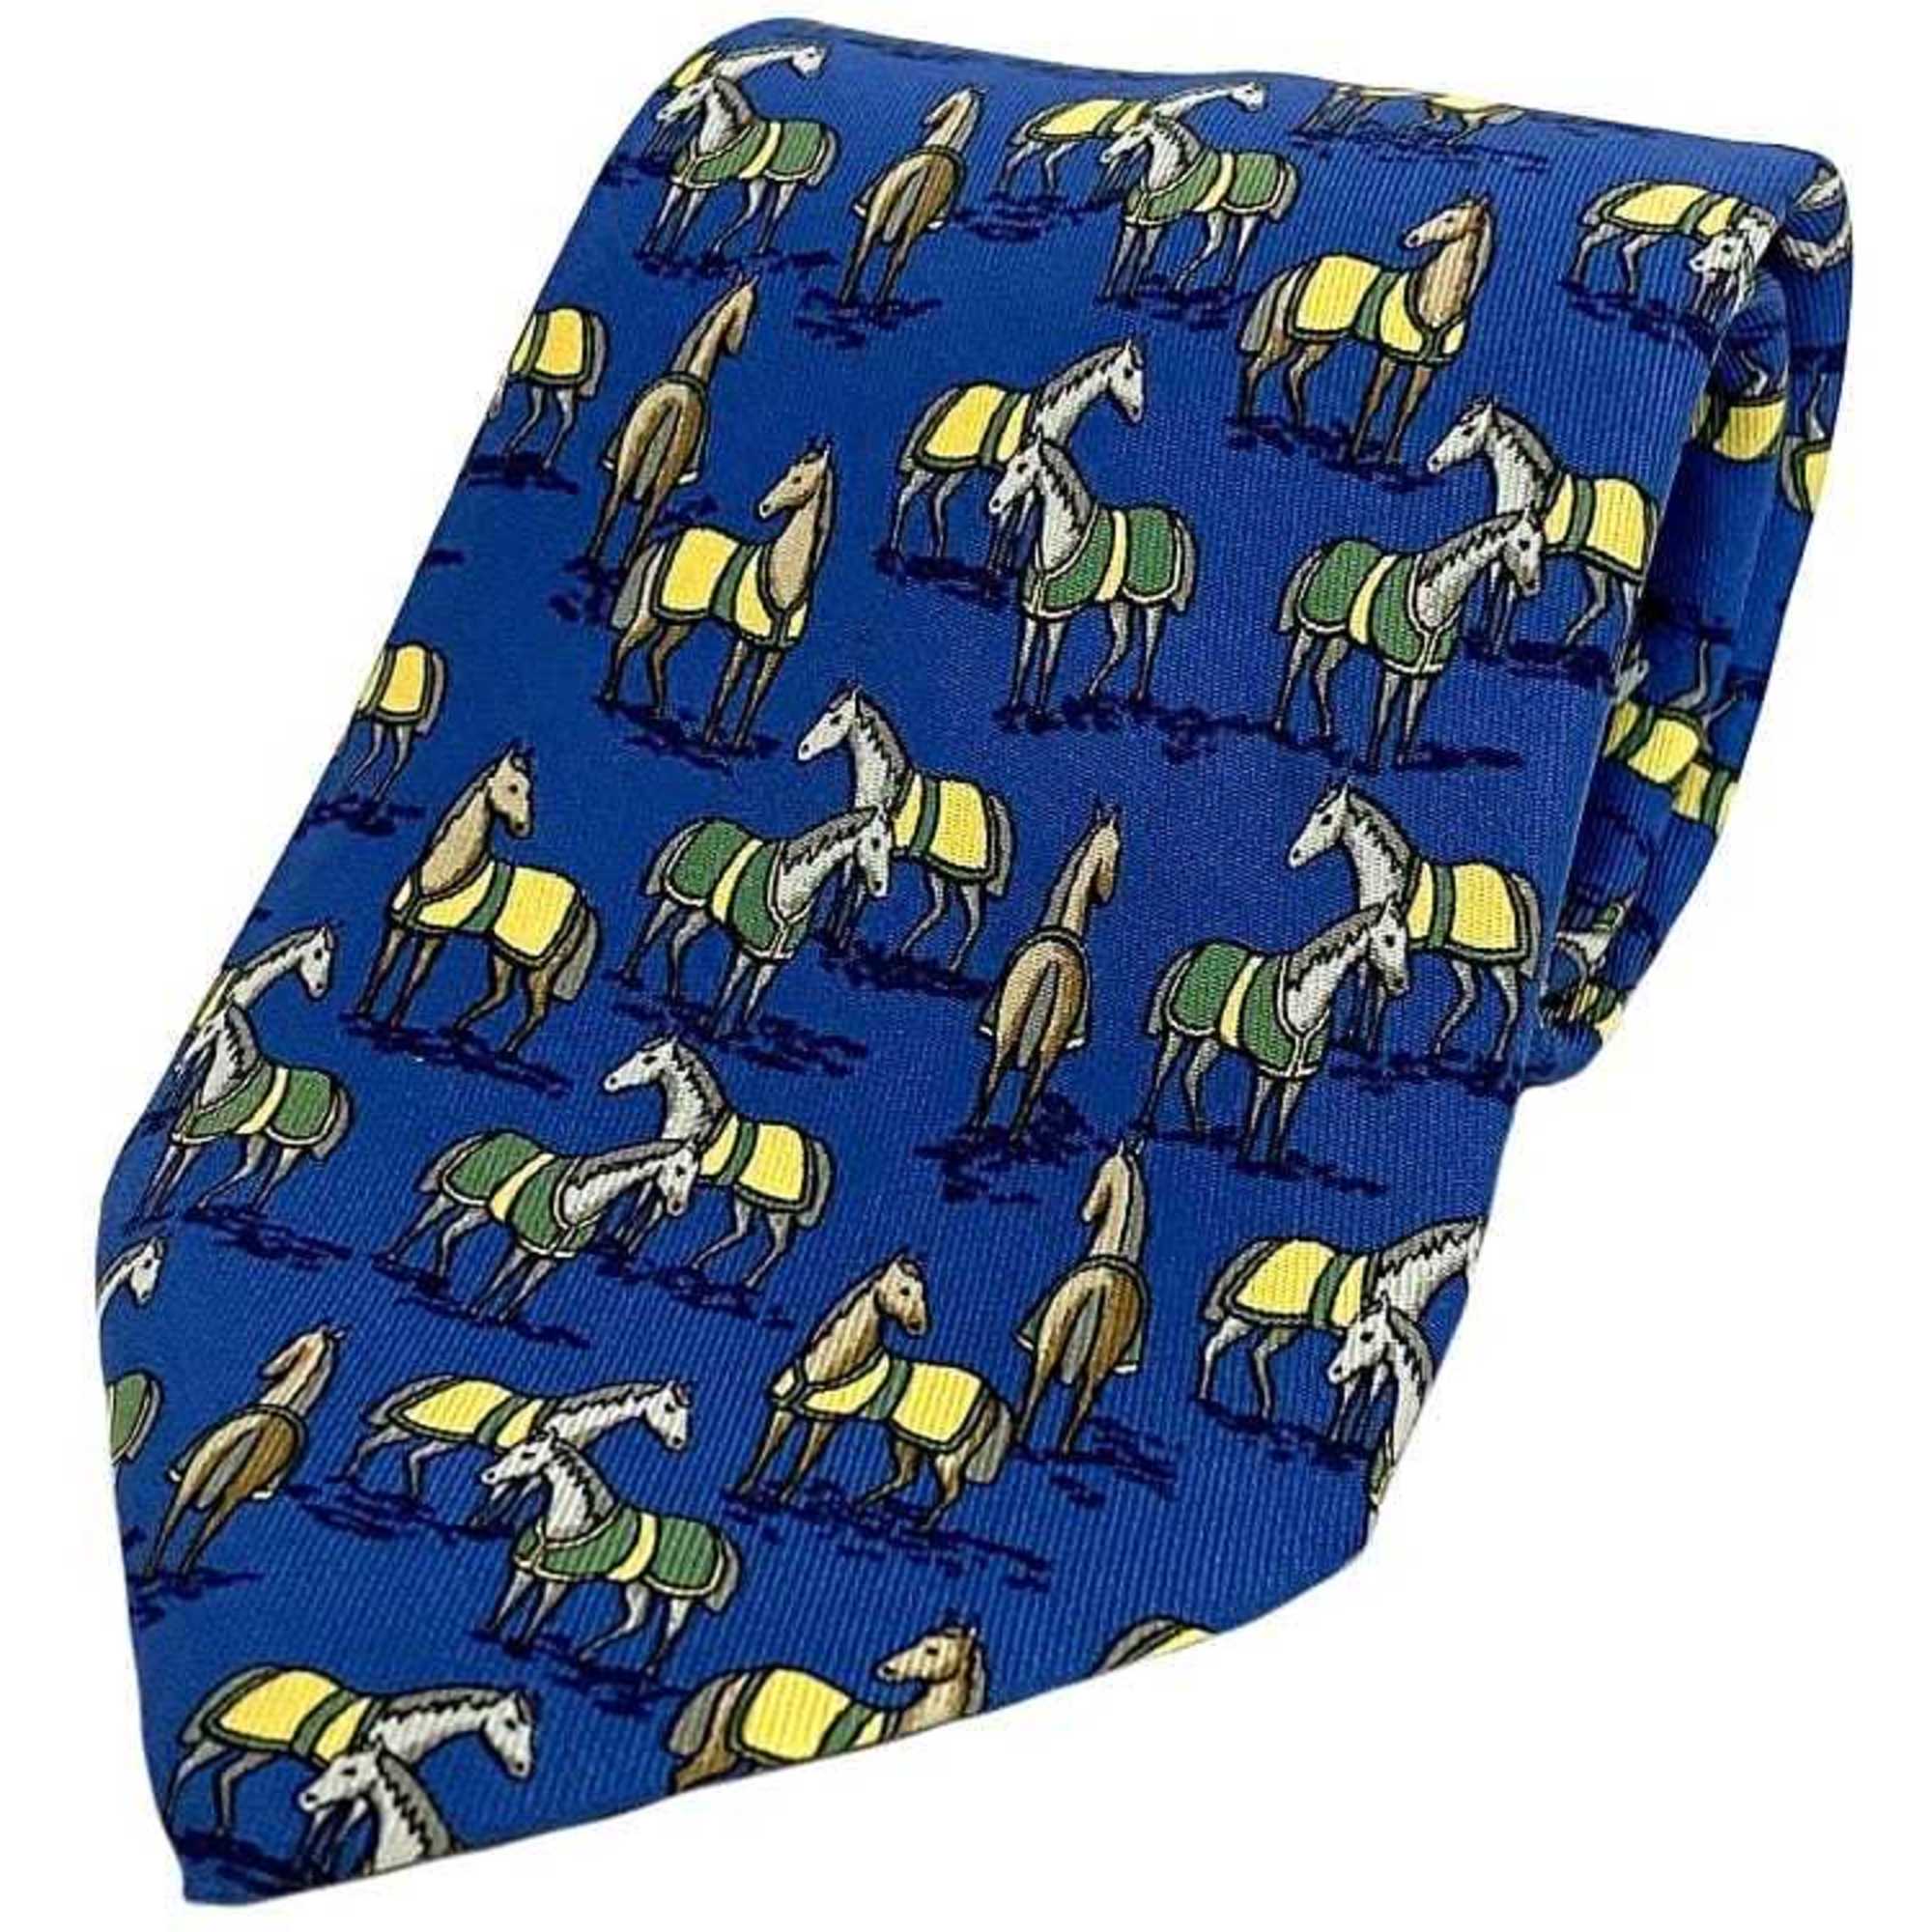 Hermes tie blue ec-20345 100% silk HERMES horse men's animal